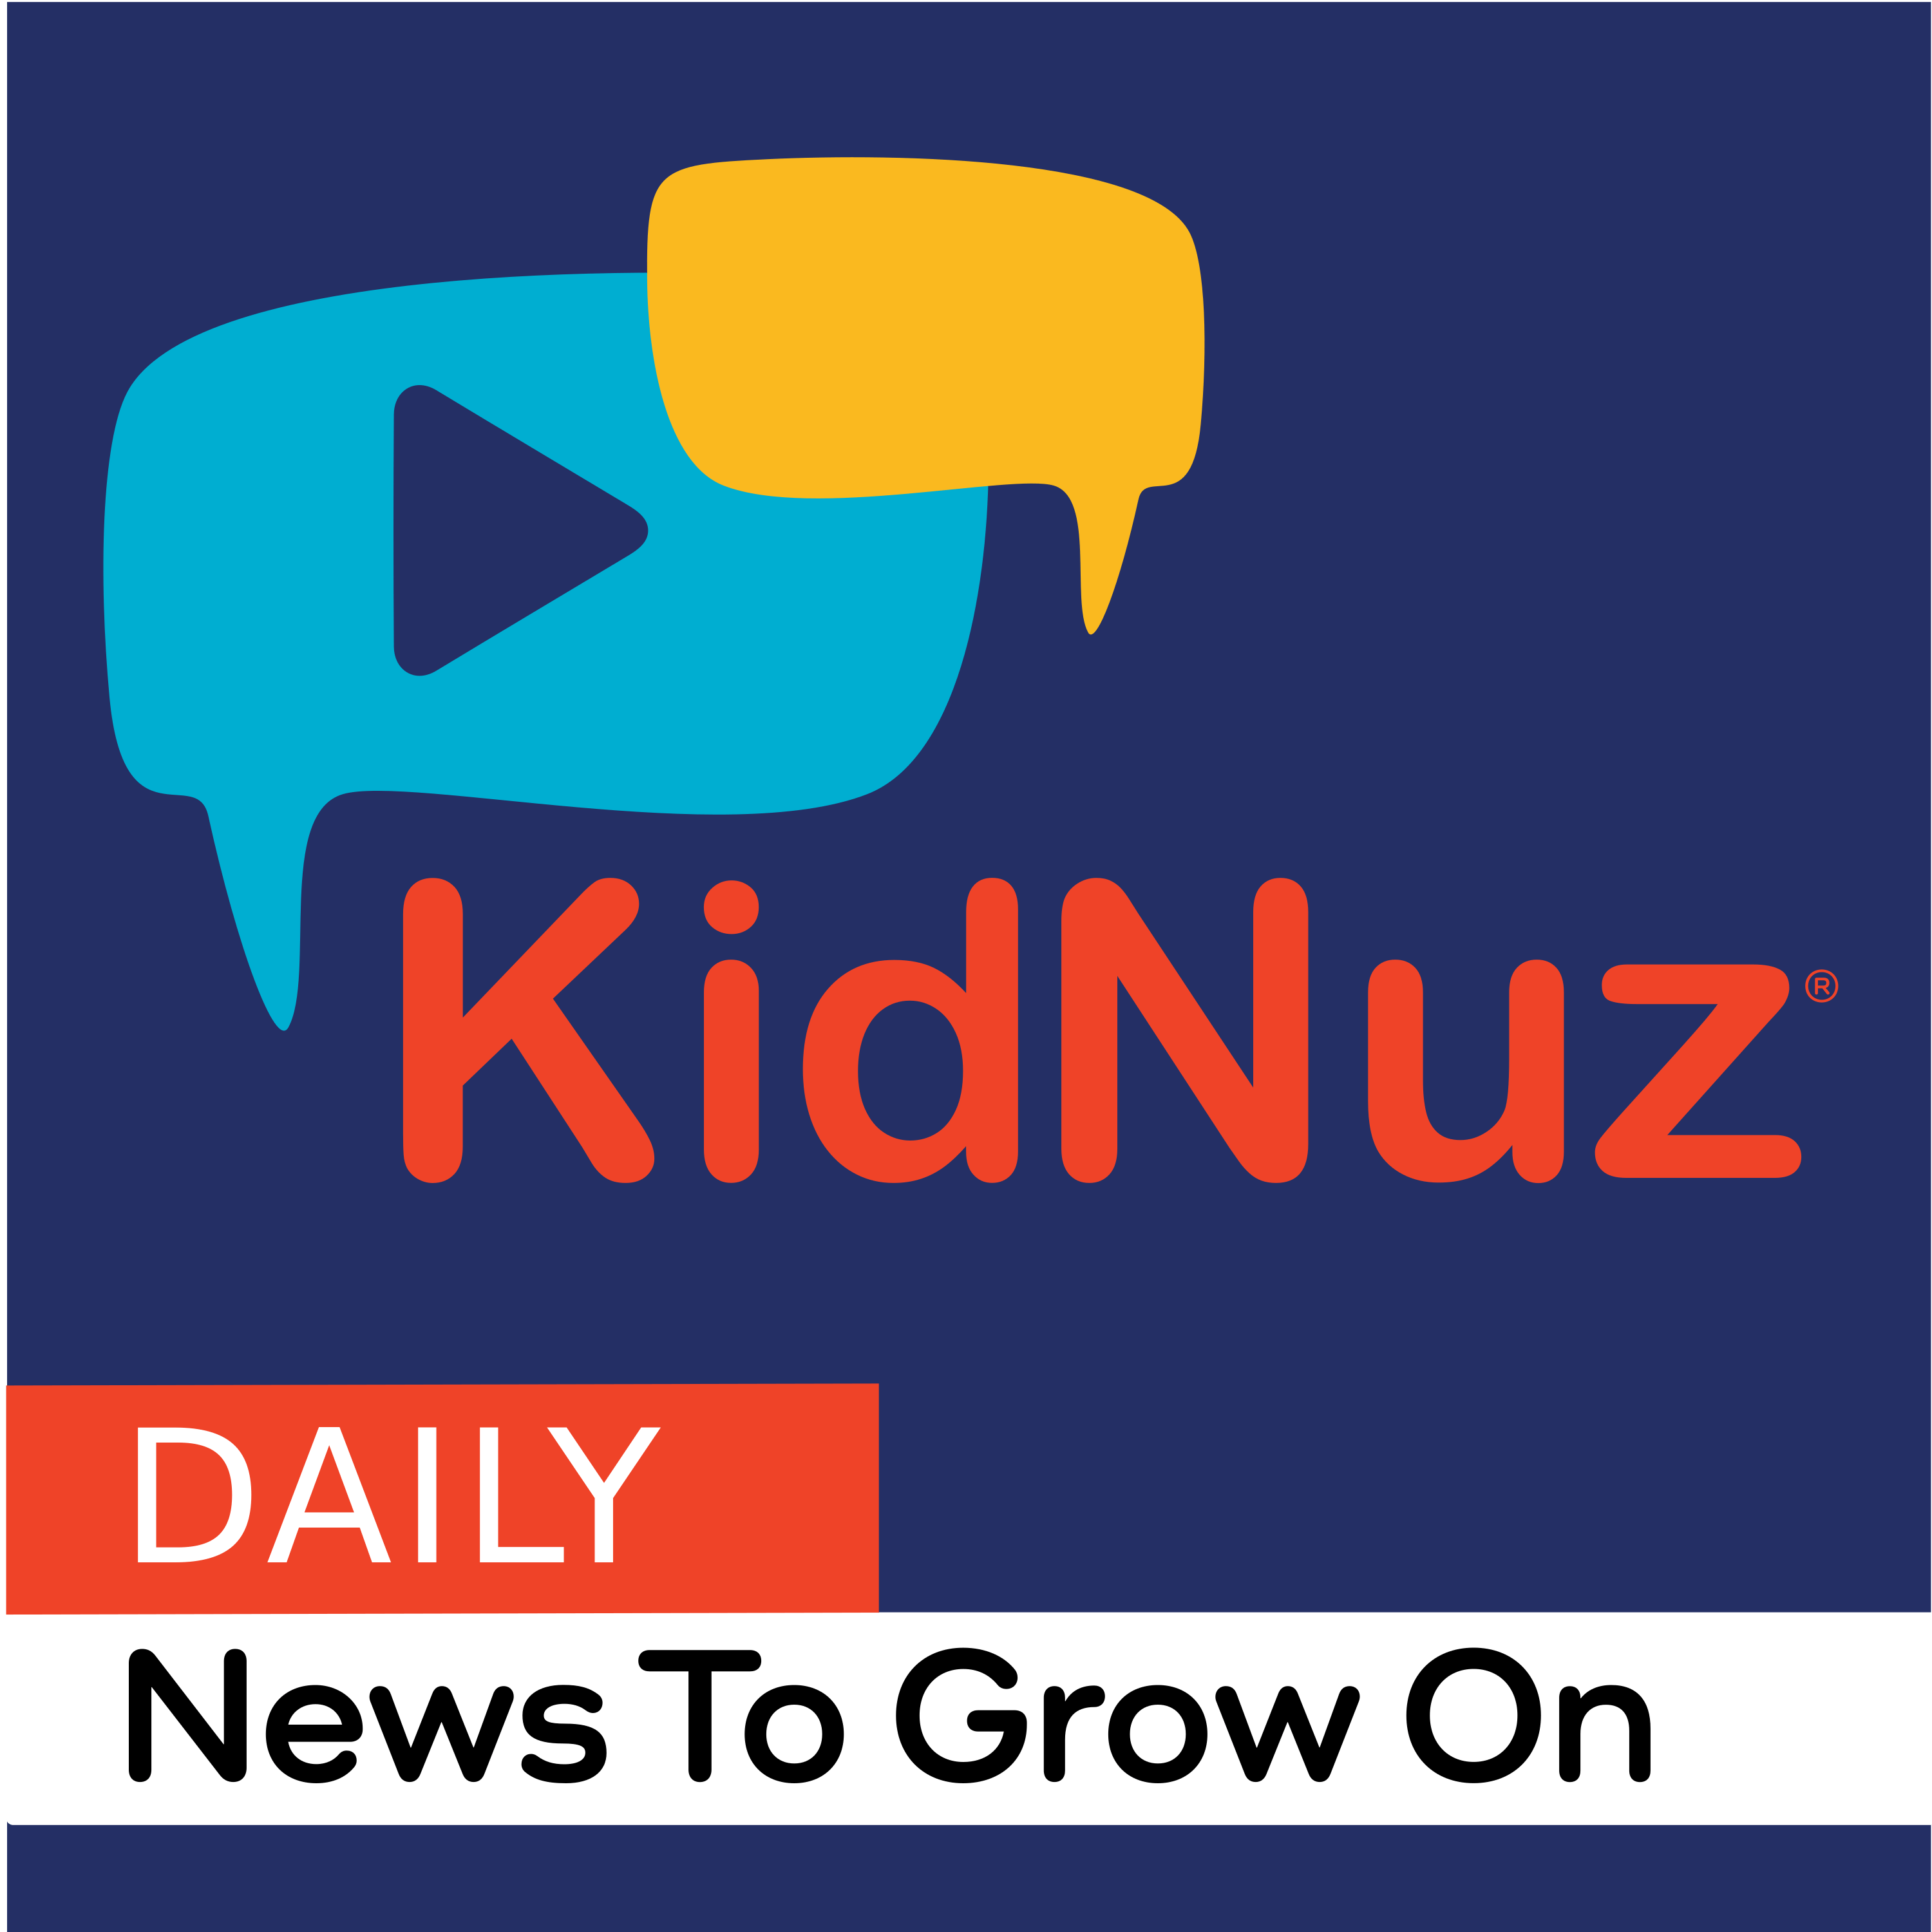 KidNuz: News for Kids